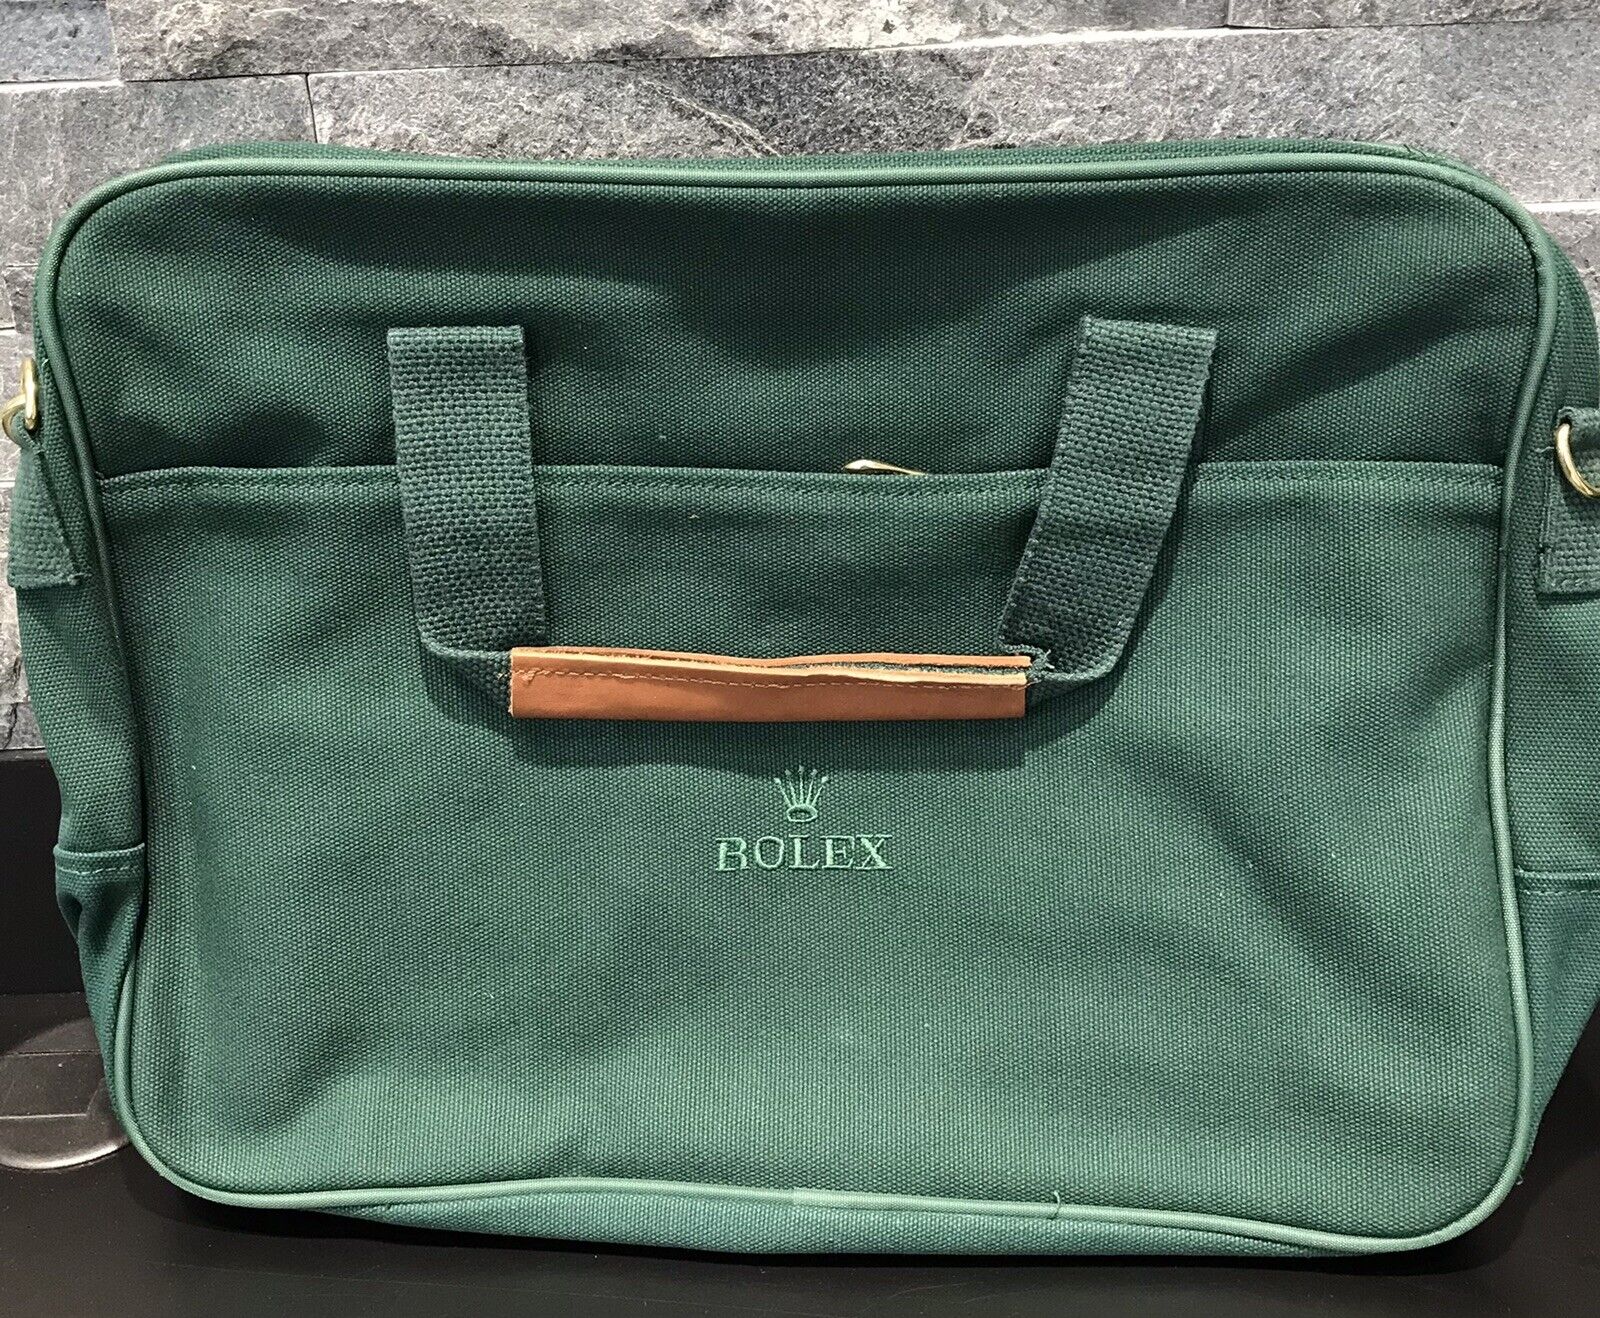 Rolex Green Duffel Bag with Interior Pockets